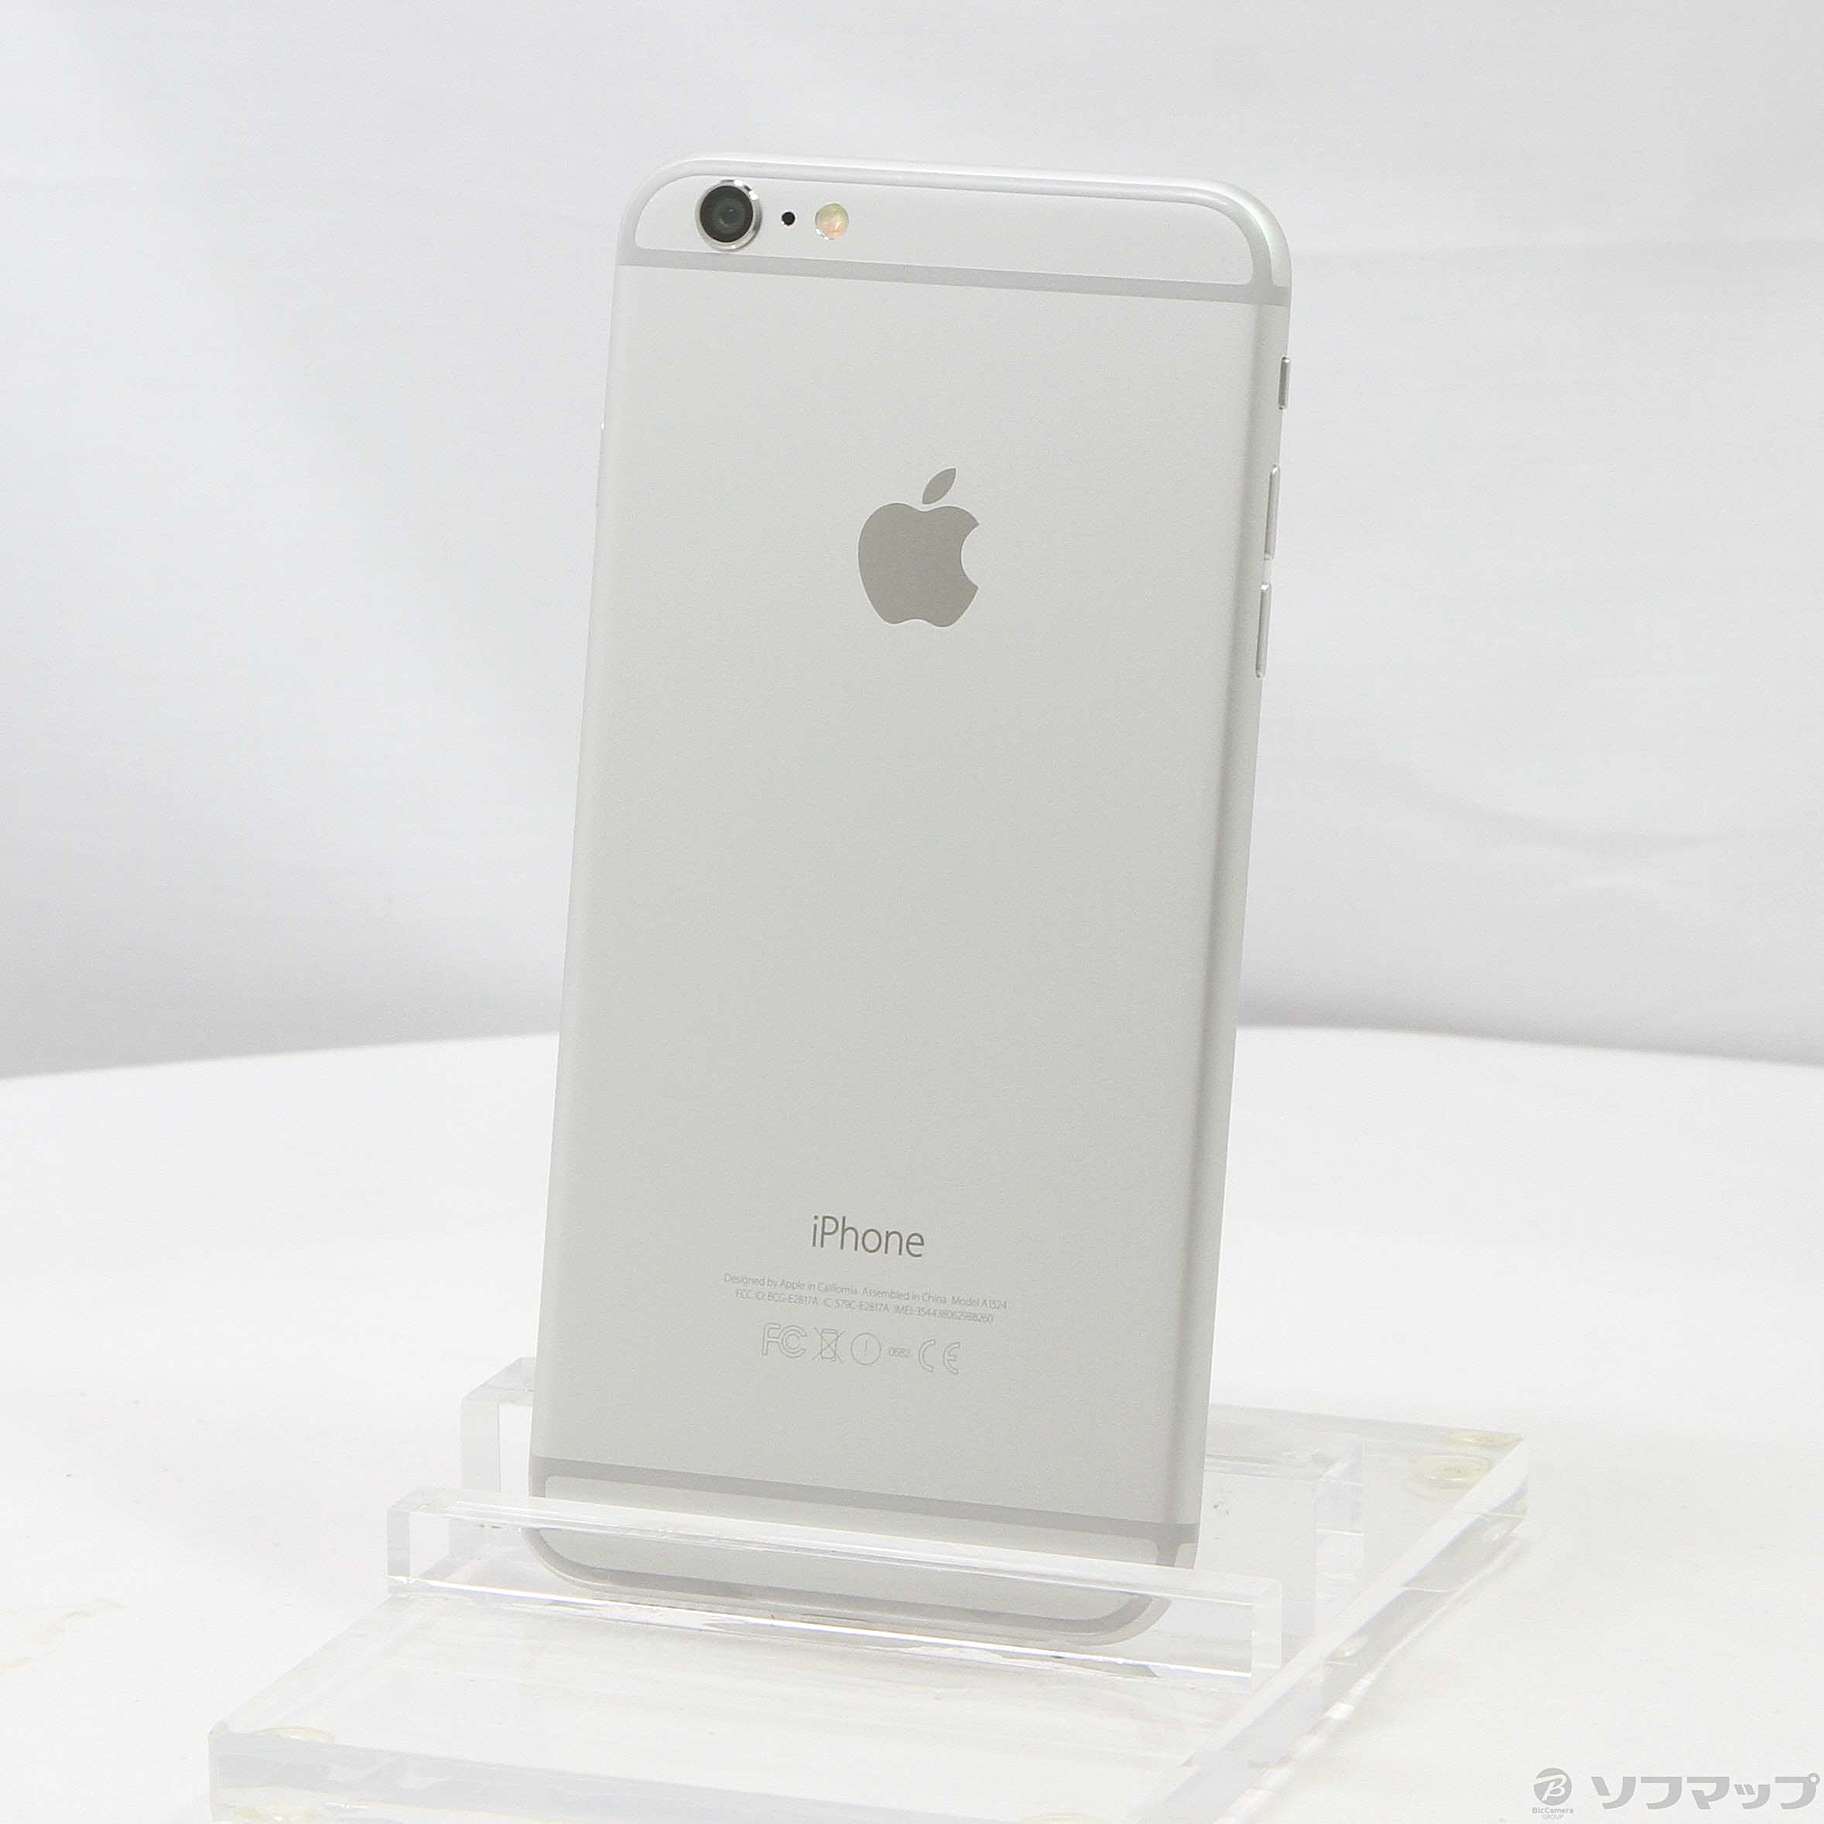 iPhone 6 Plus Silver 64 GB docomo - スマートフォン本体